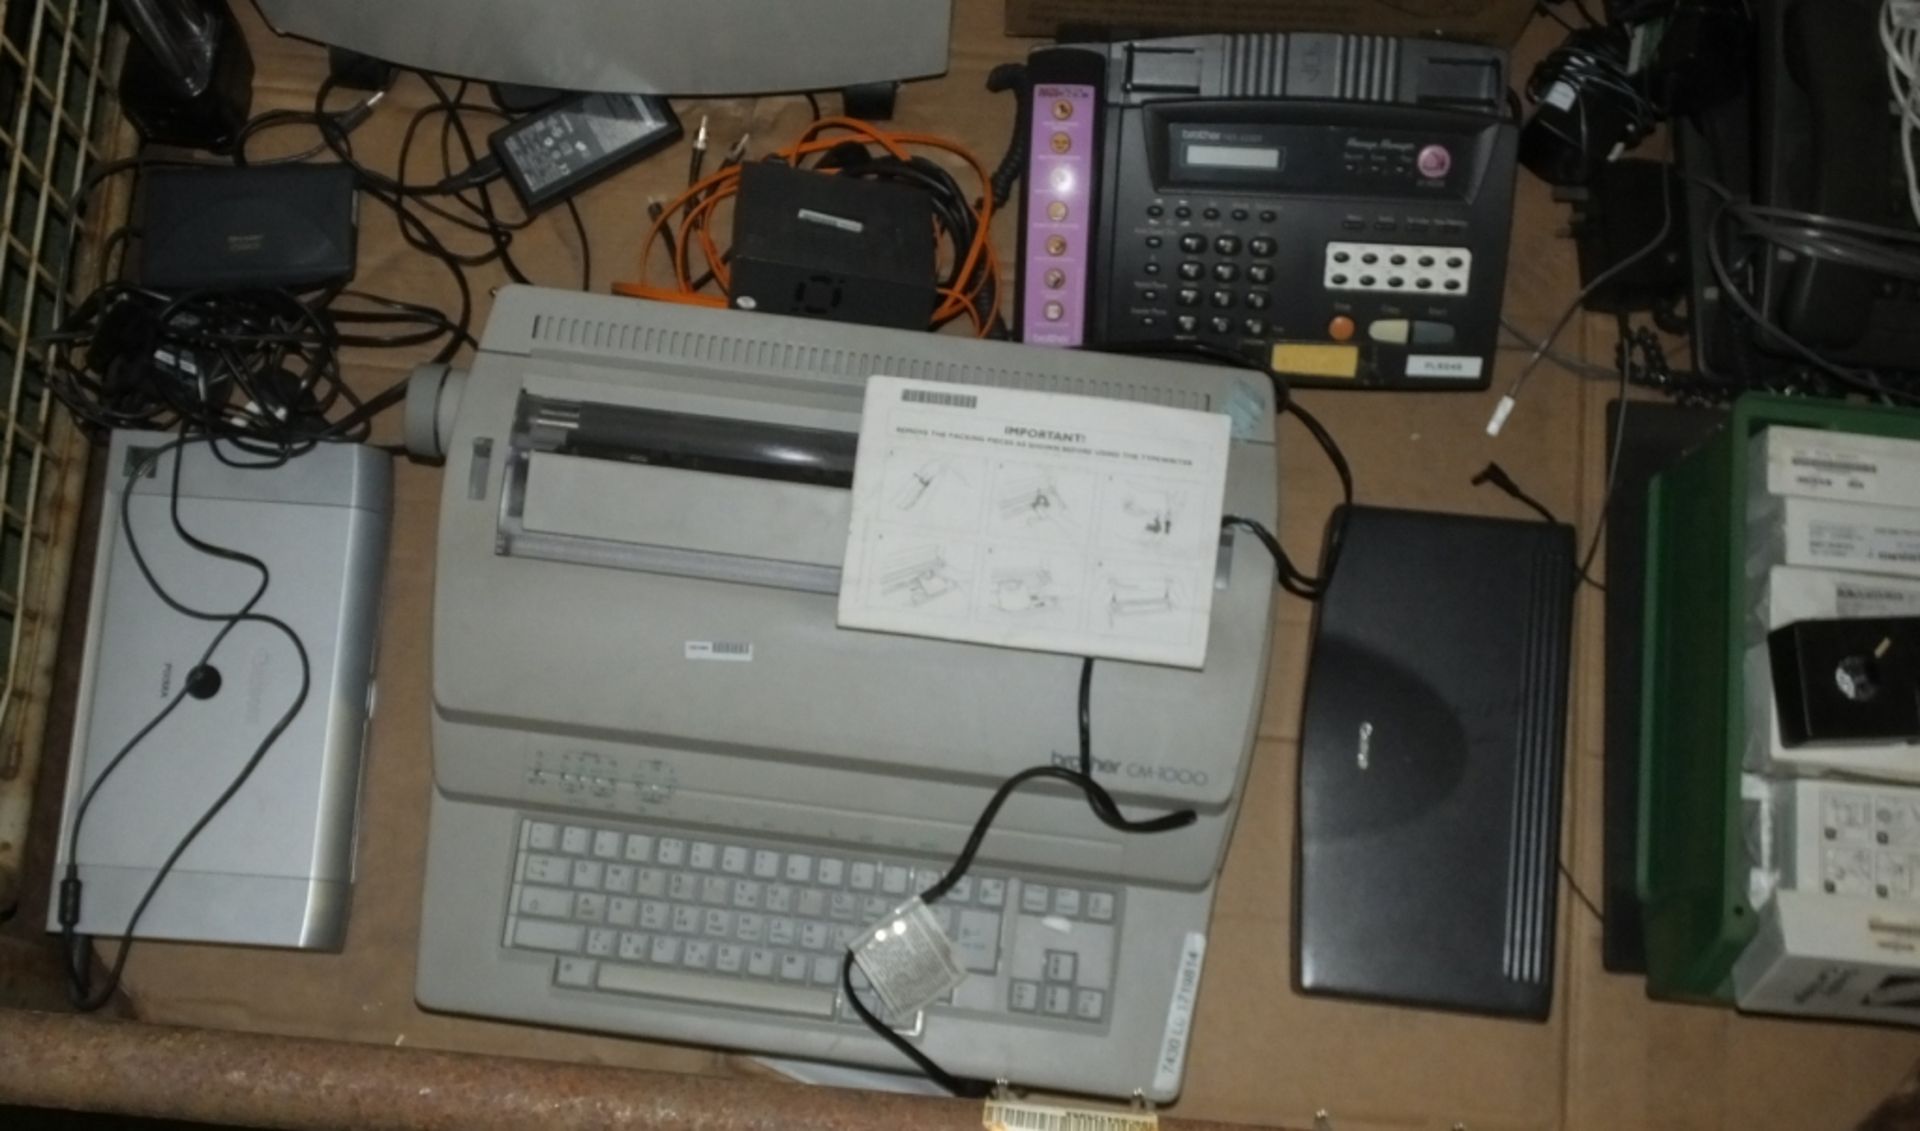 5x Panasonic Desk Phones, Brother Electronic Typewriter, Media Convertor, Rexel 250 Shredd - Image 4 of 5